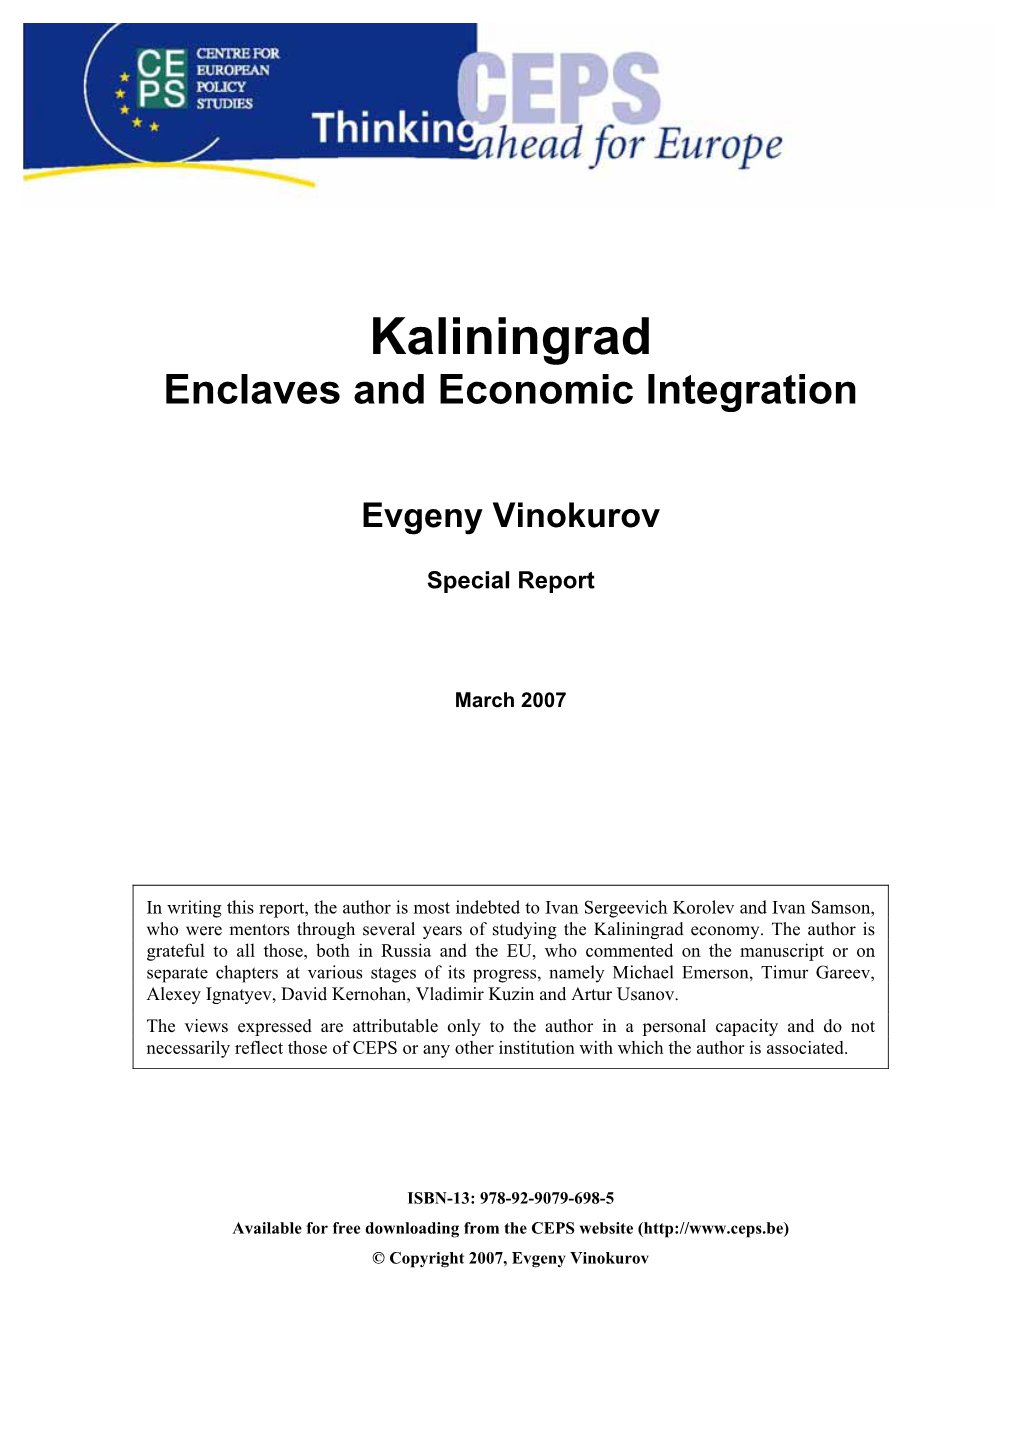 Kaliningrad Enclaves and Economic Integration